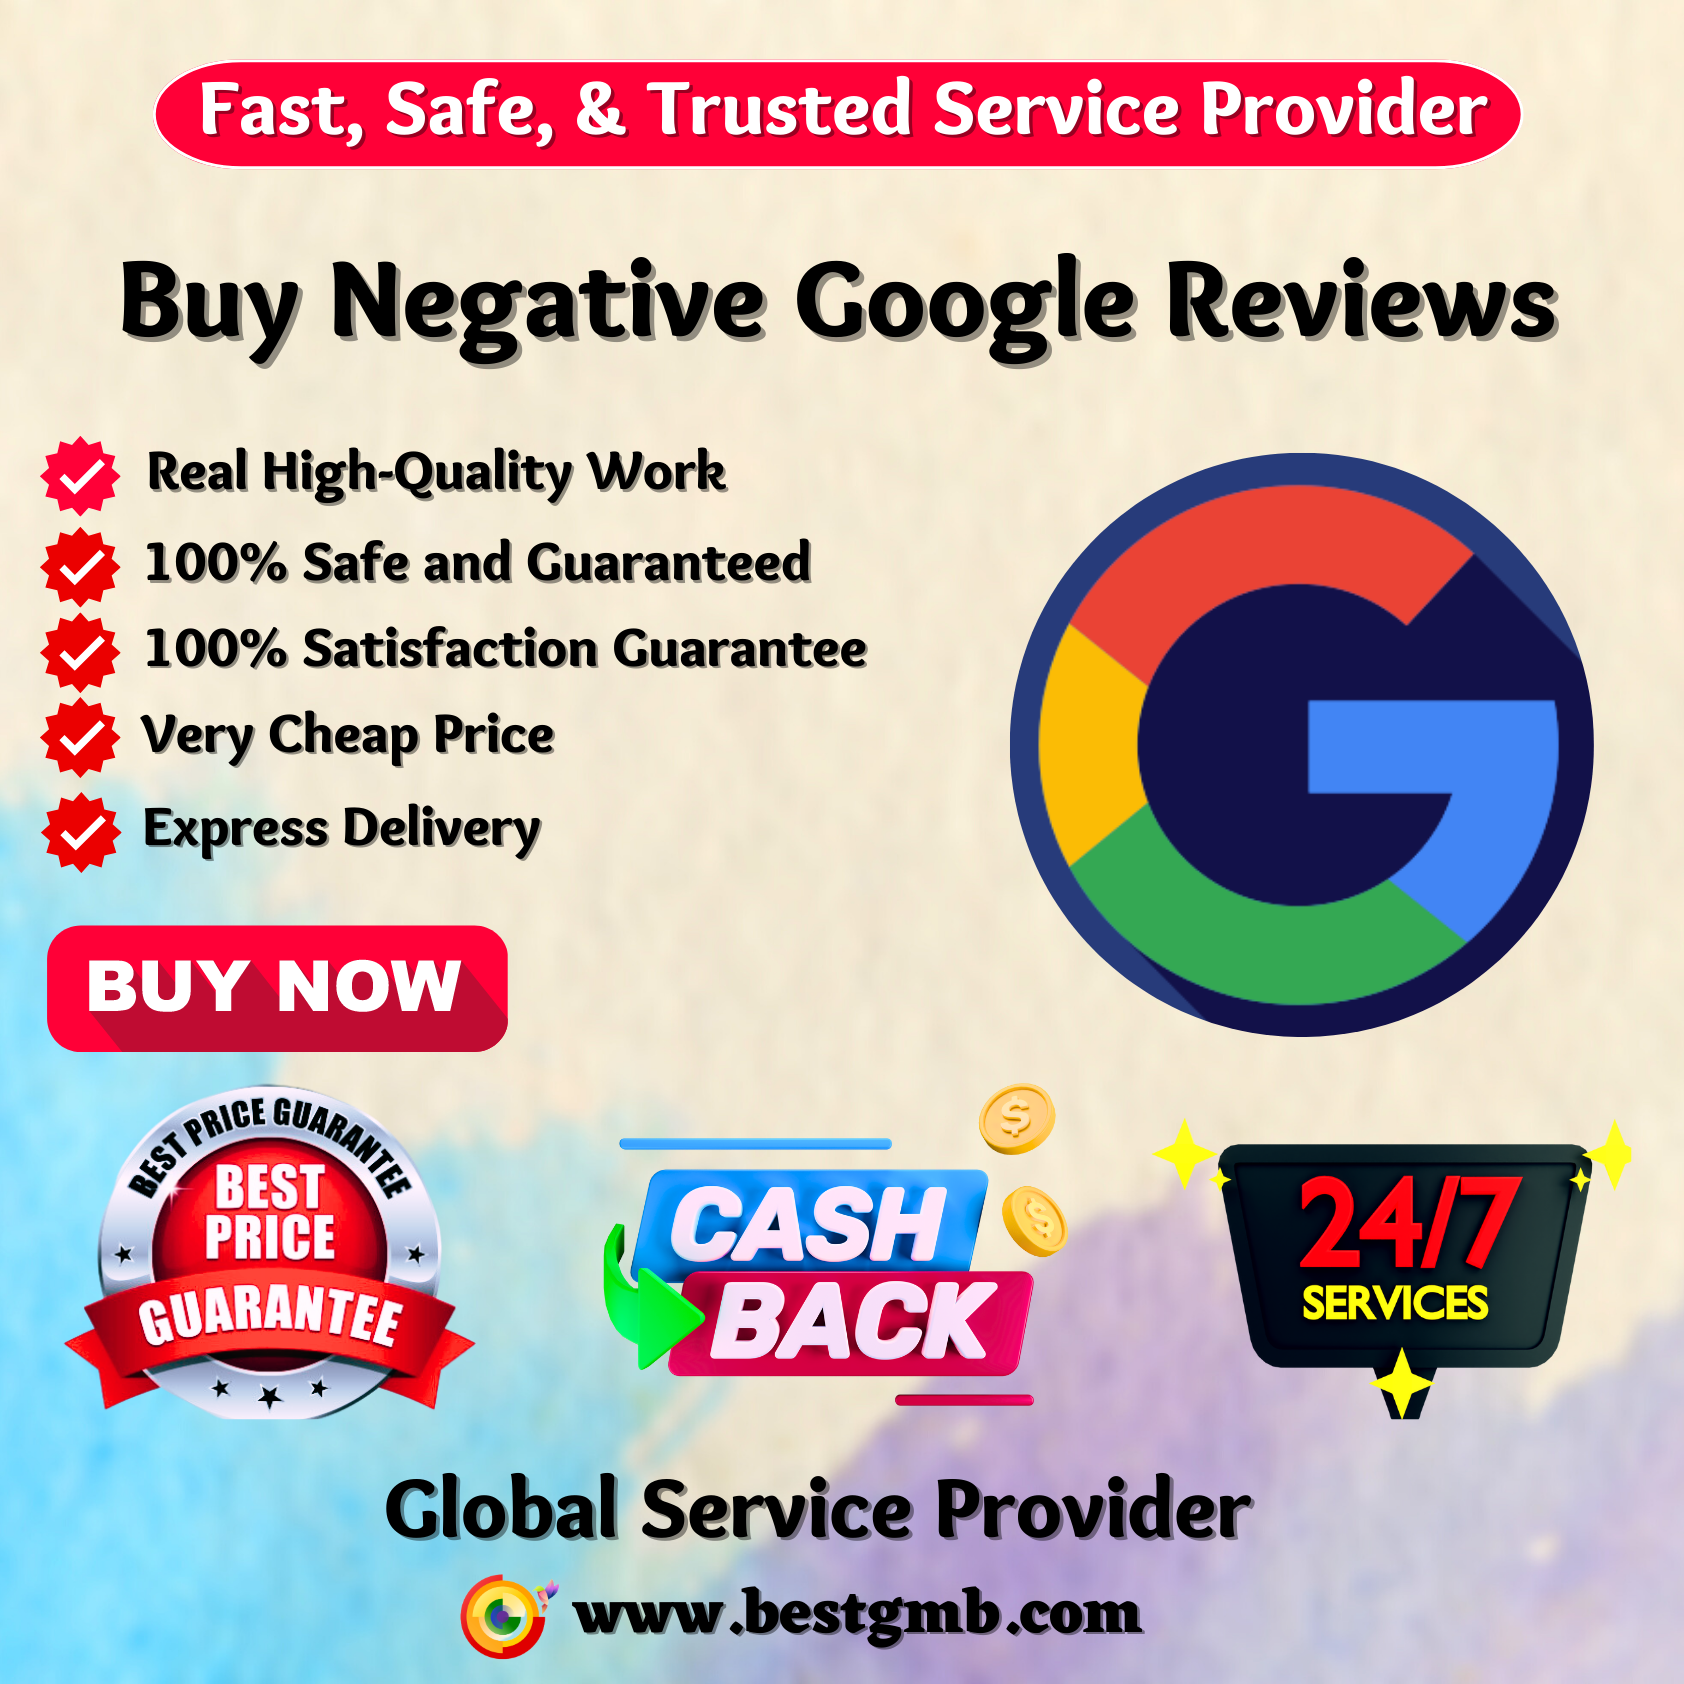 Buy Negative Google Reviews - Non-Drop 1 Star Reviews cheap